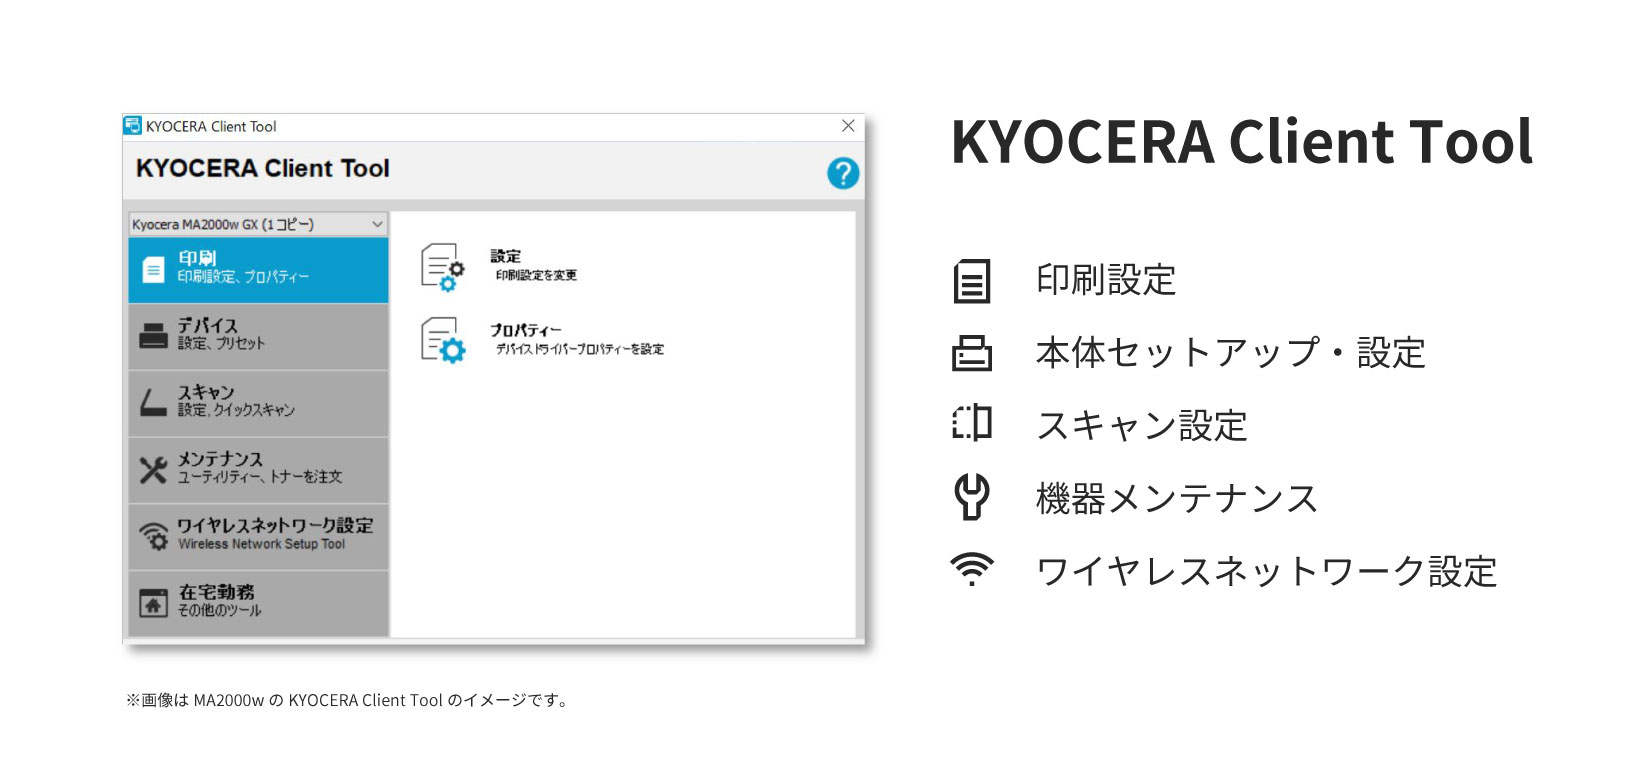 KYOCERA Client Toolで多彩な機能を活用